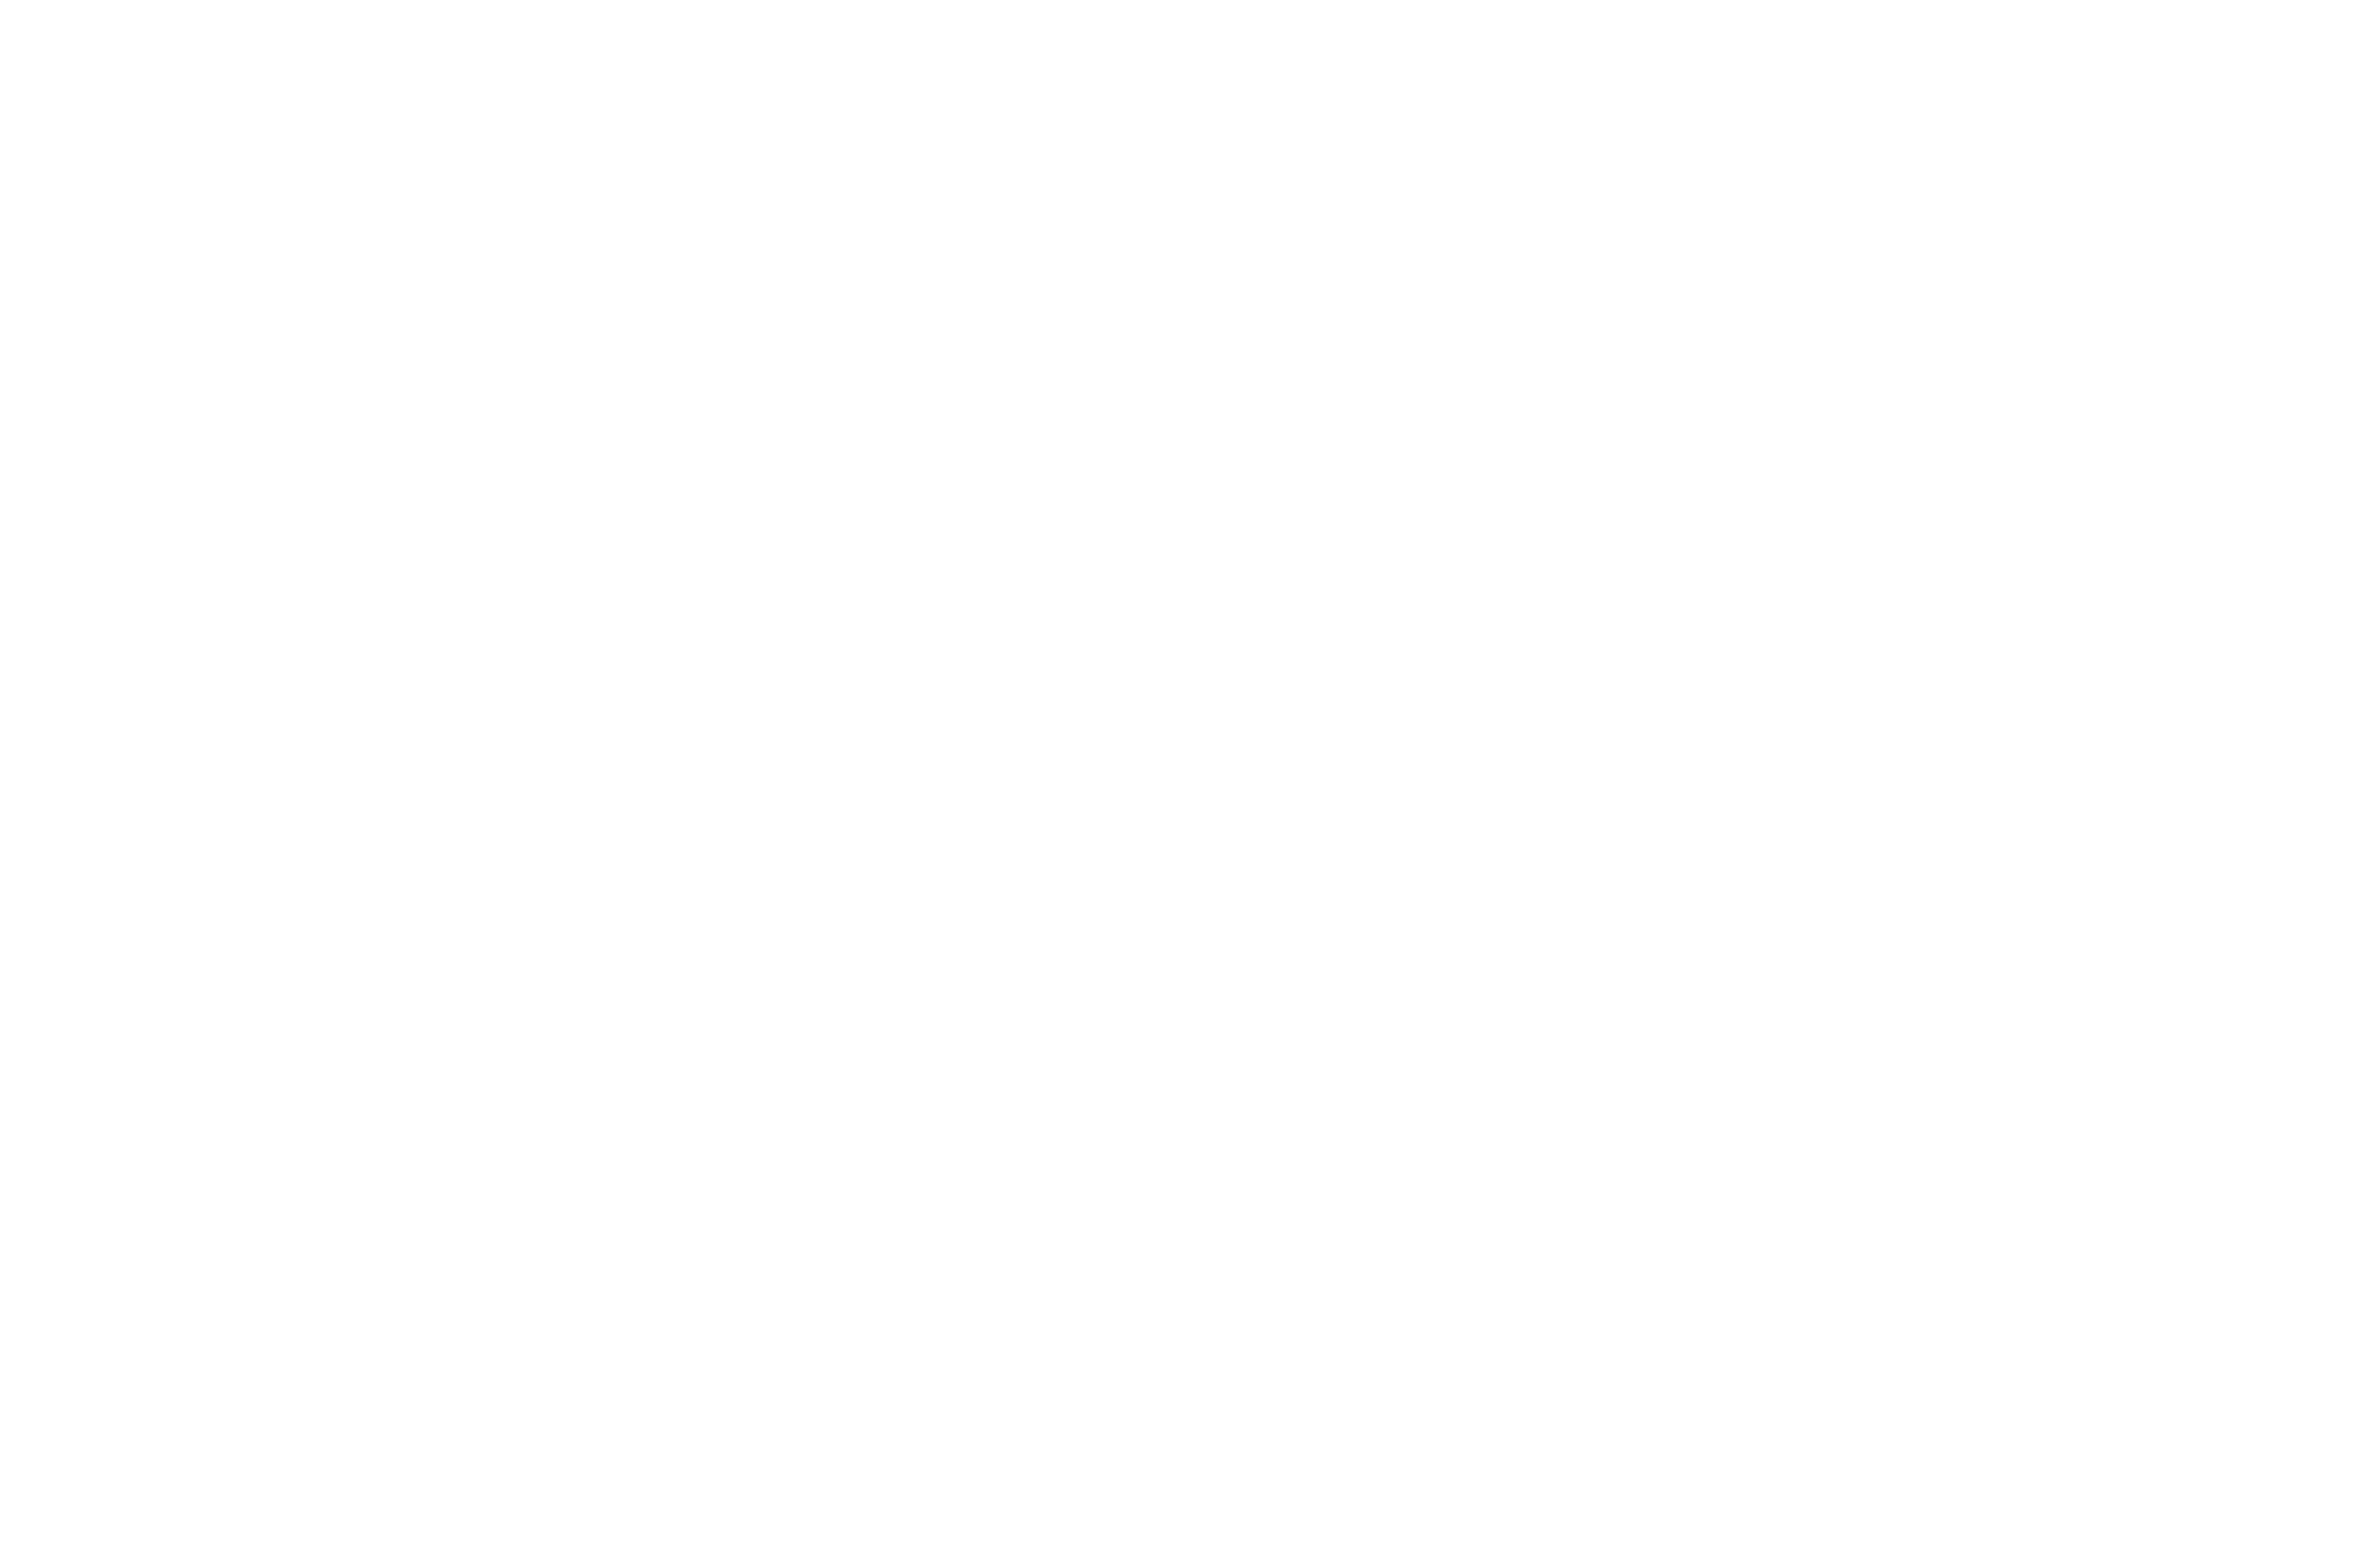 Trek suisse